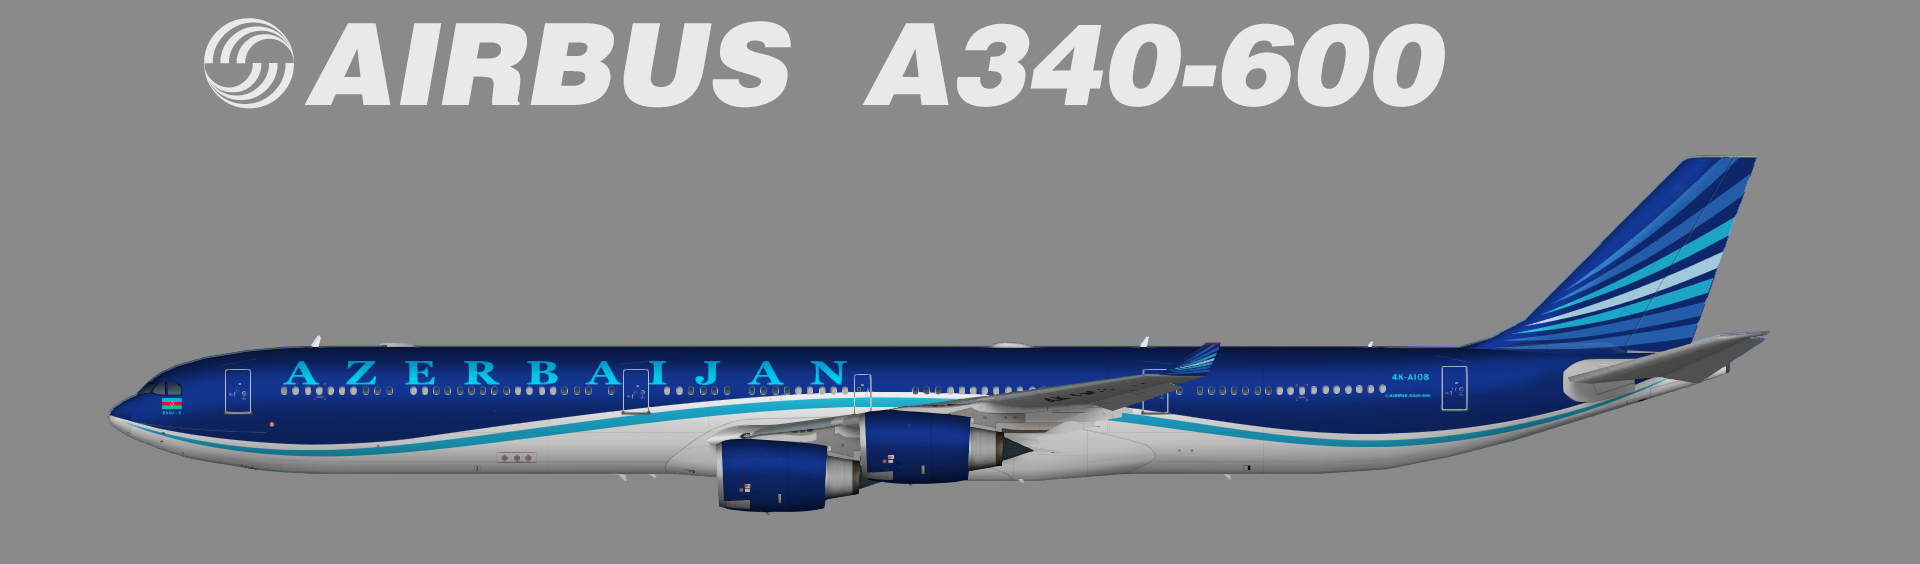 Airbus A340-600 Azerbaijan Government